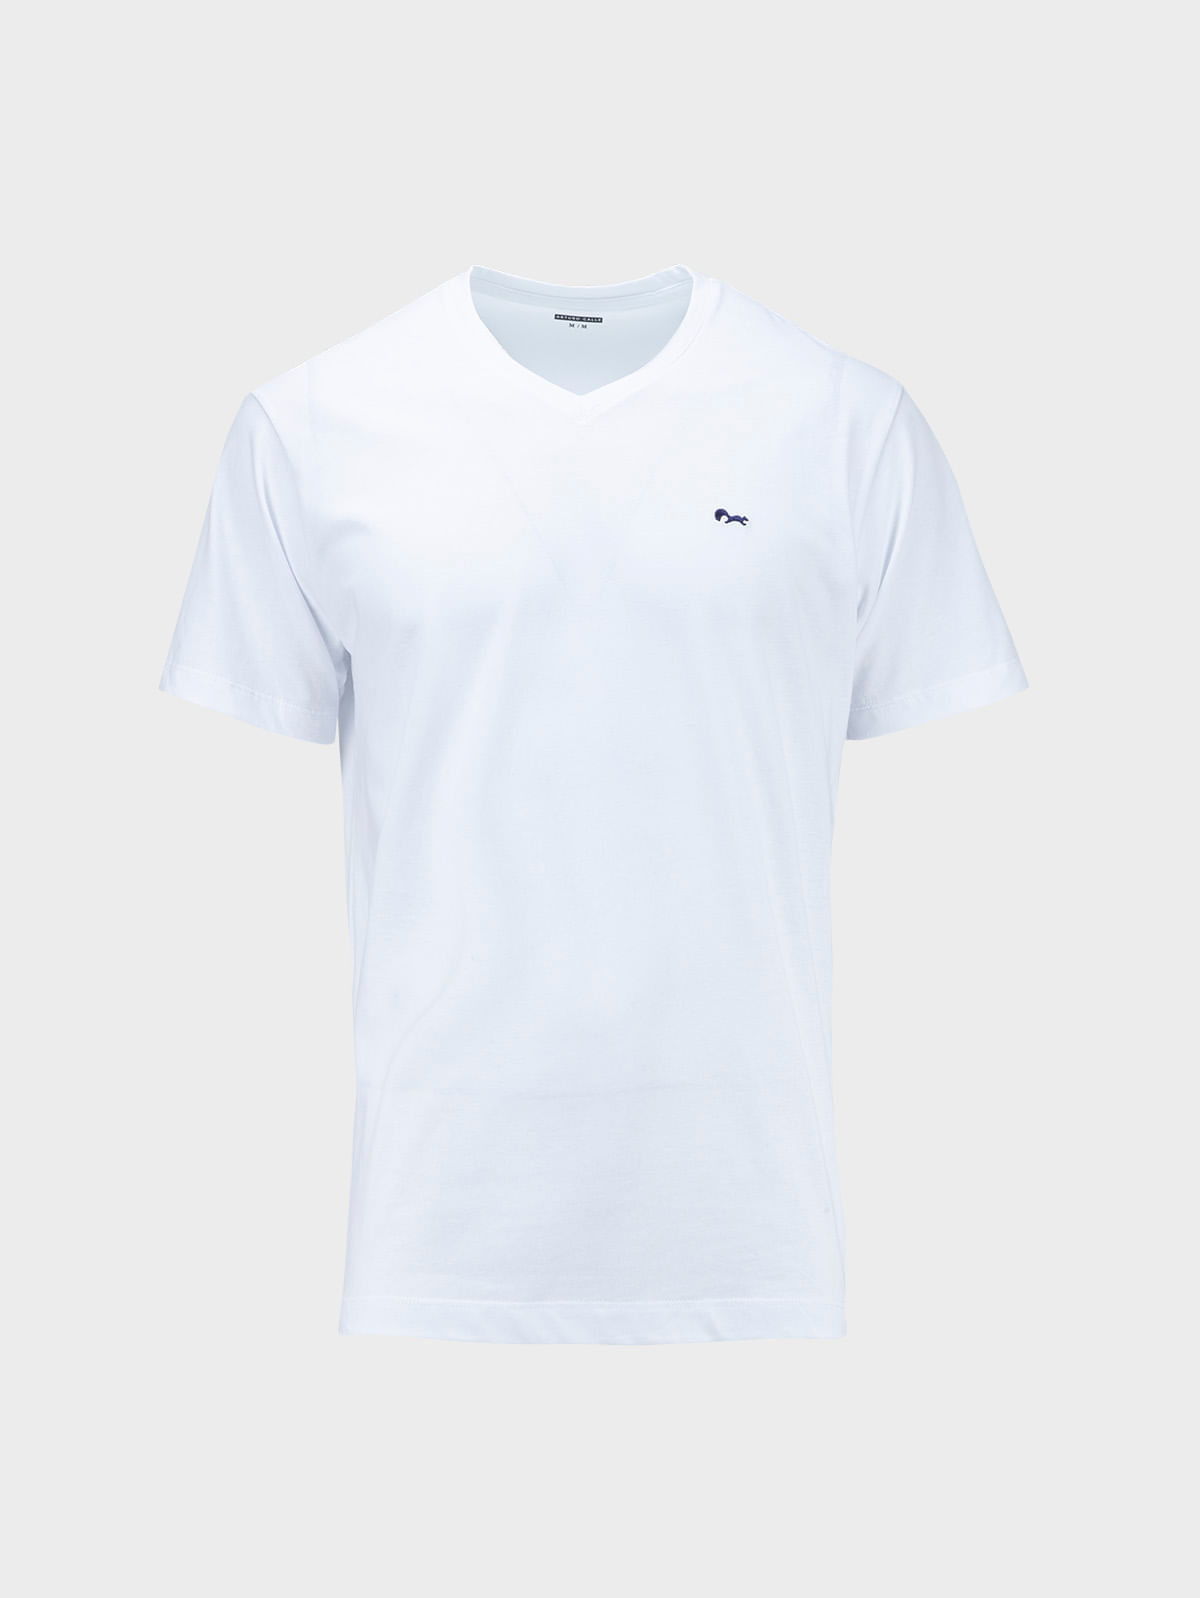 Camiseta Lacoste Regular Fit Blanca Para Hombre